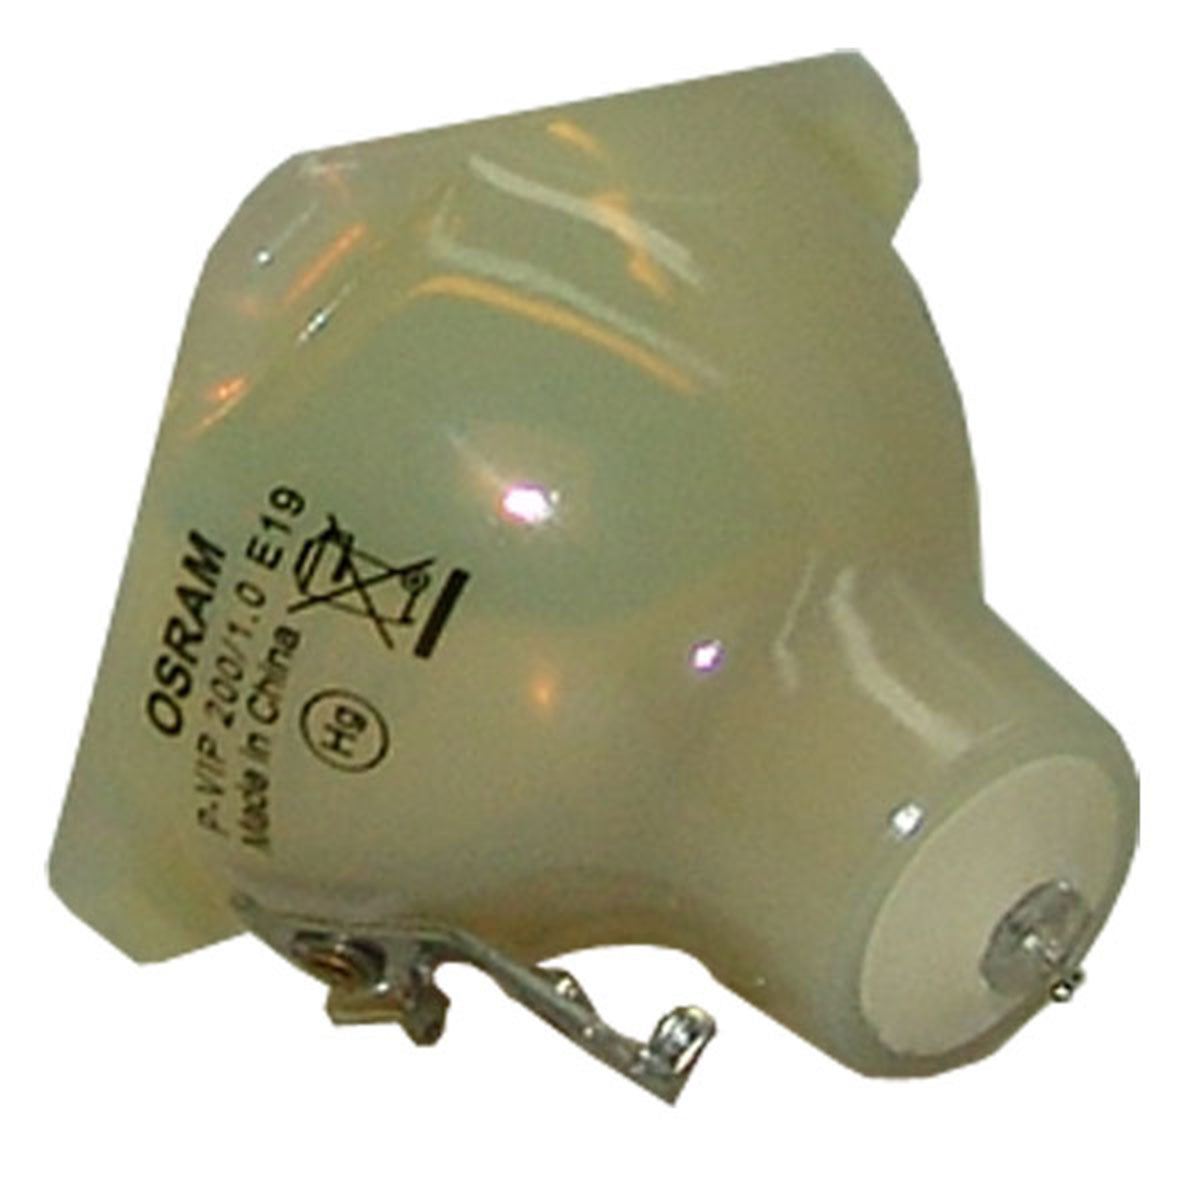 Digital Projection 105-495 Osram Projector Bare Lamp